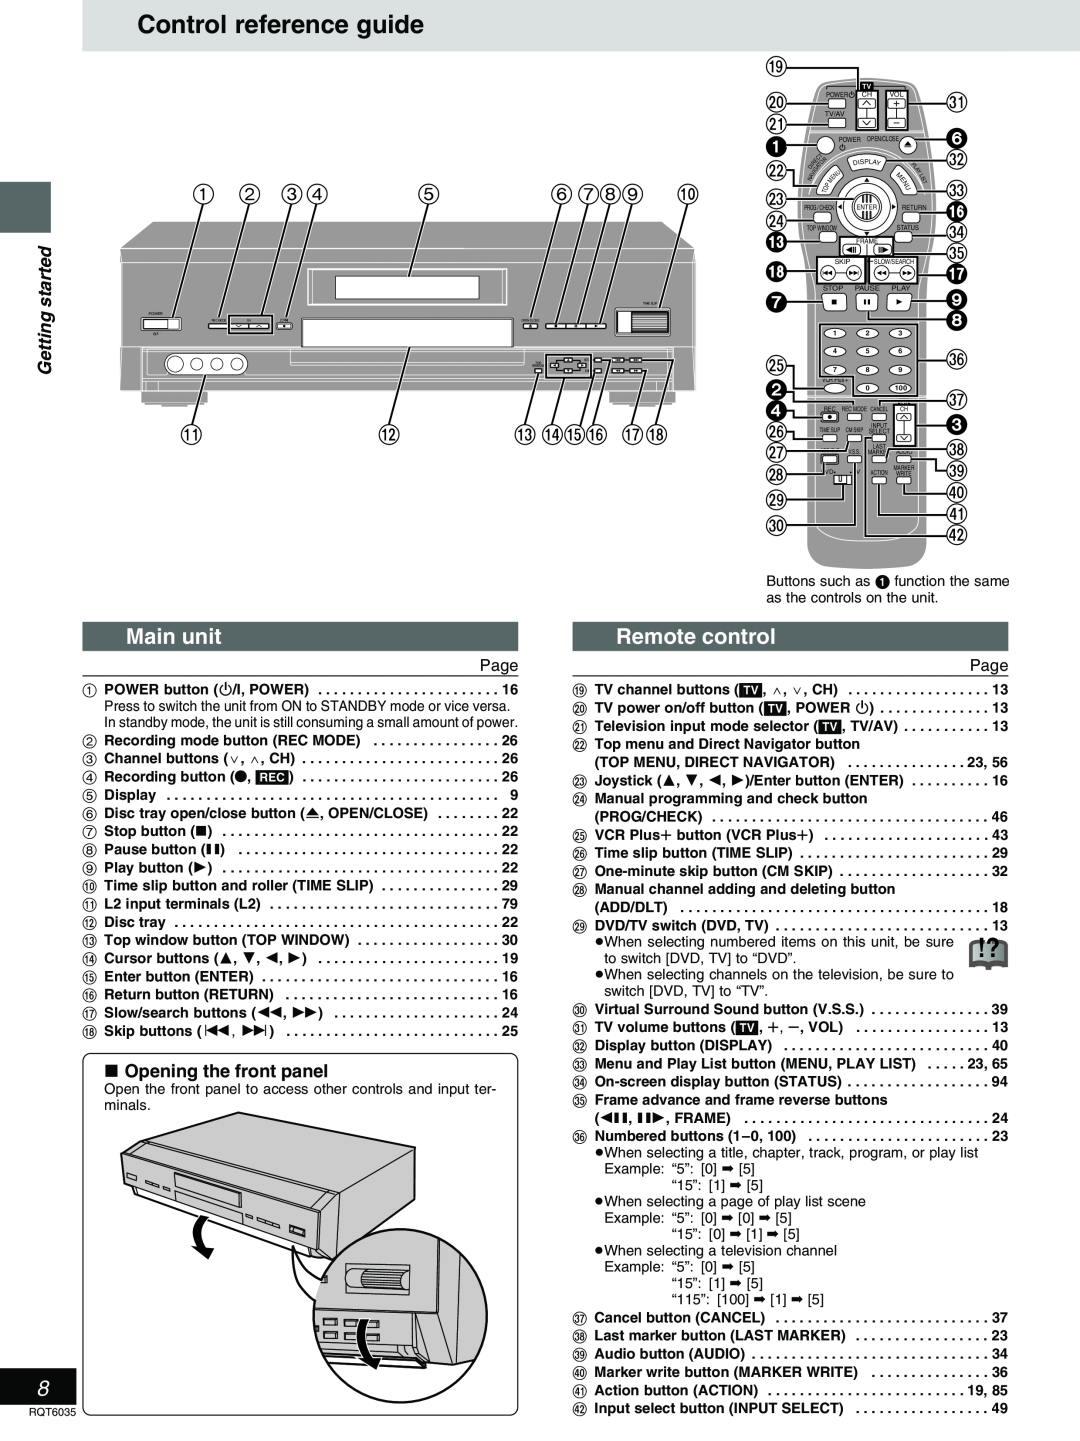 Panasonic DMR-E20 warranty Control reference guide, Main unit, Remote control 